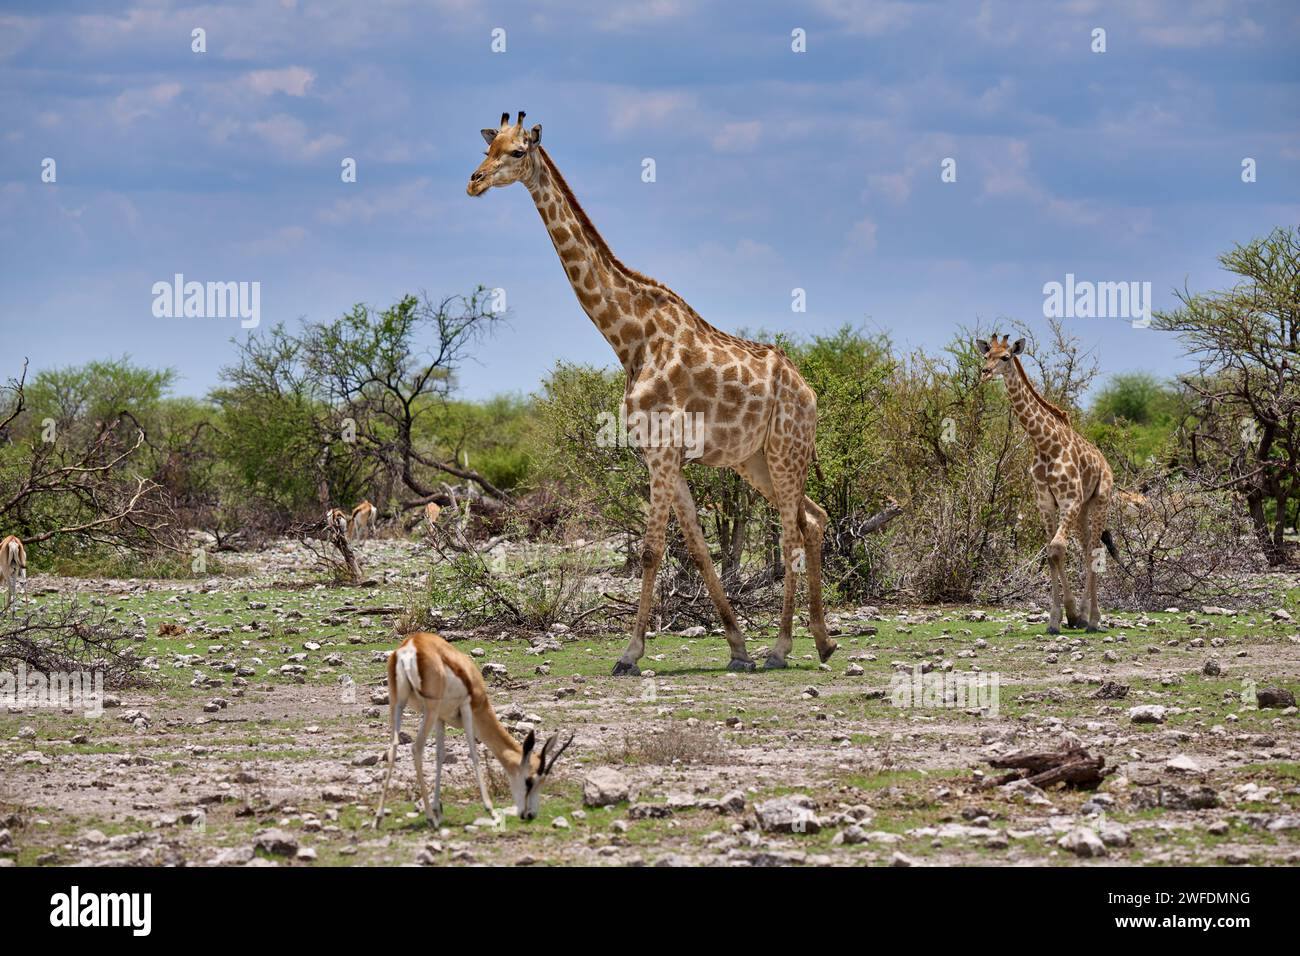 Angolan giraffe or Namibian giraffe or smokey giraffe (Giraffa camelopardalis angolensis) mother with youngster, Etosha National Park, Namibia, Africa Stock Photo